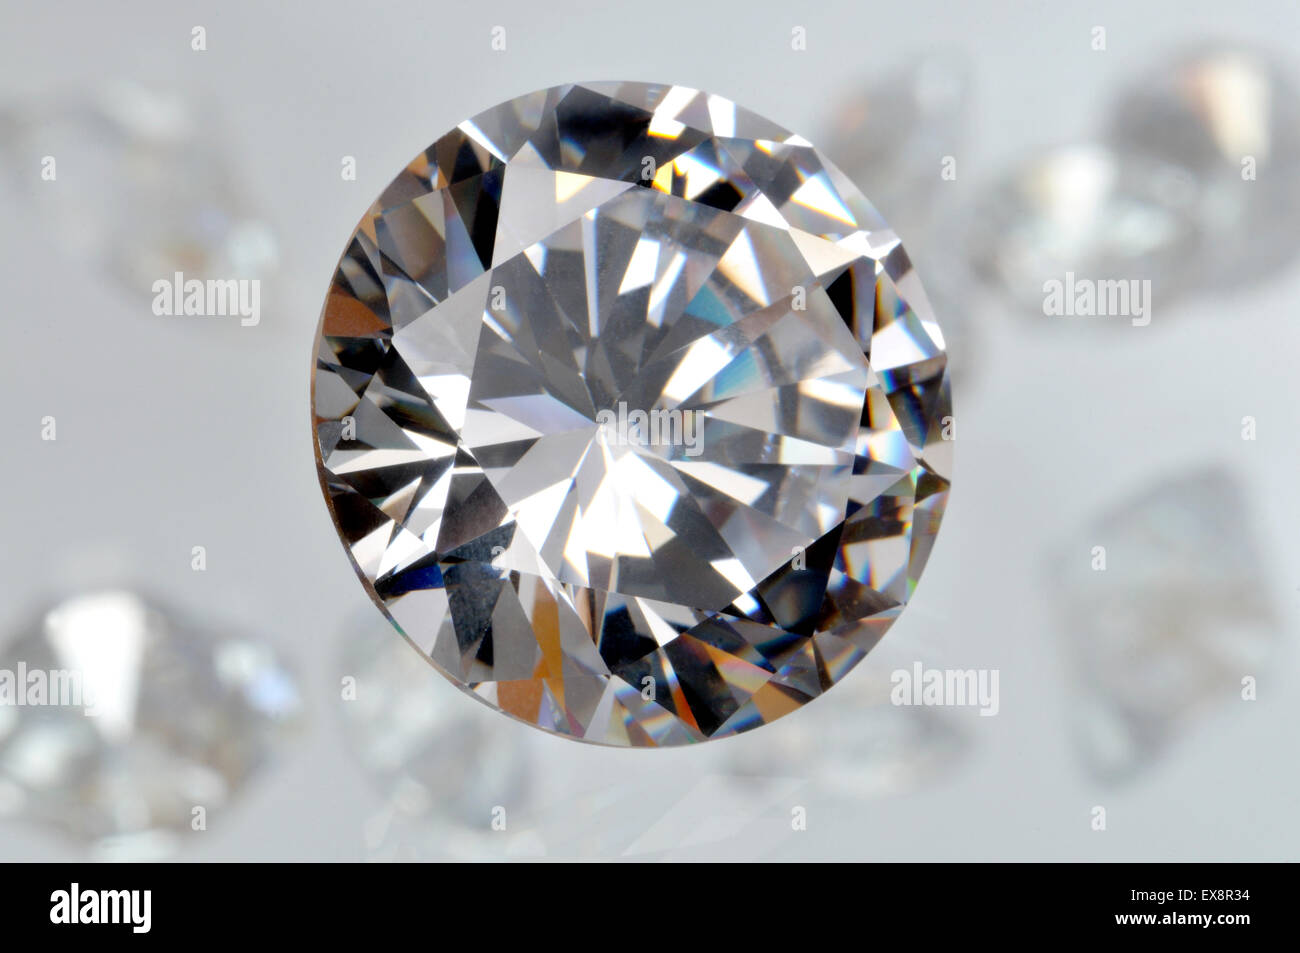 Round-Cut diamond (synthetic / lab-created - cubic zirconia) Stock Photo